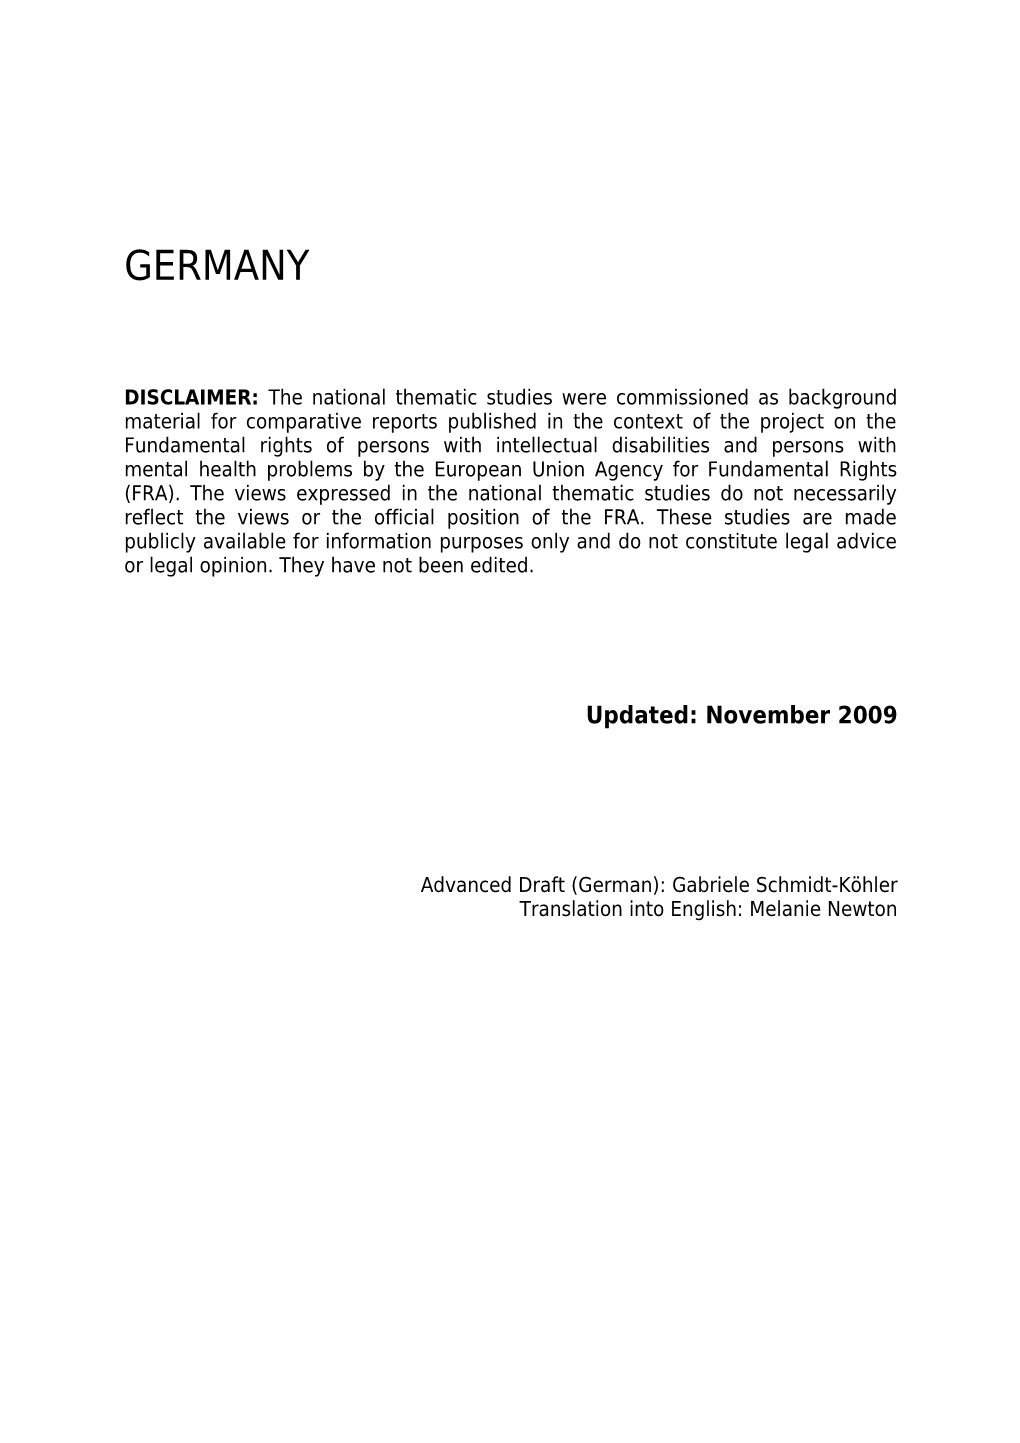 Advanced Draft (German): Gabriele Schmidt-Köhler